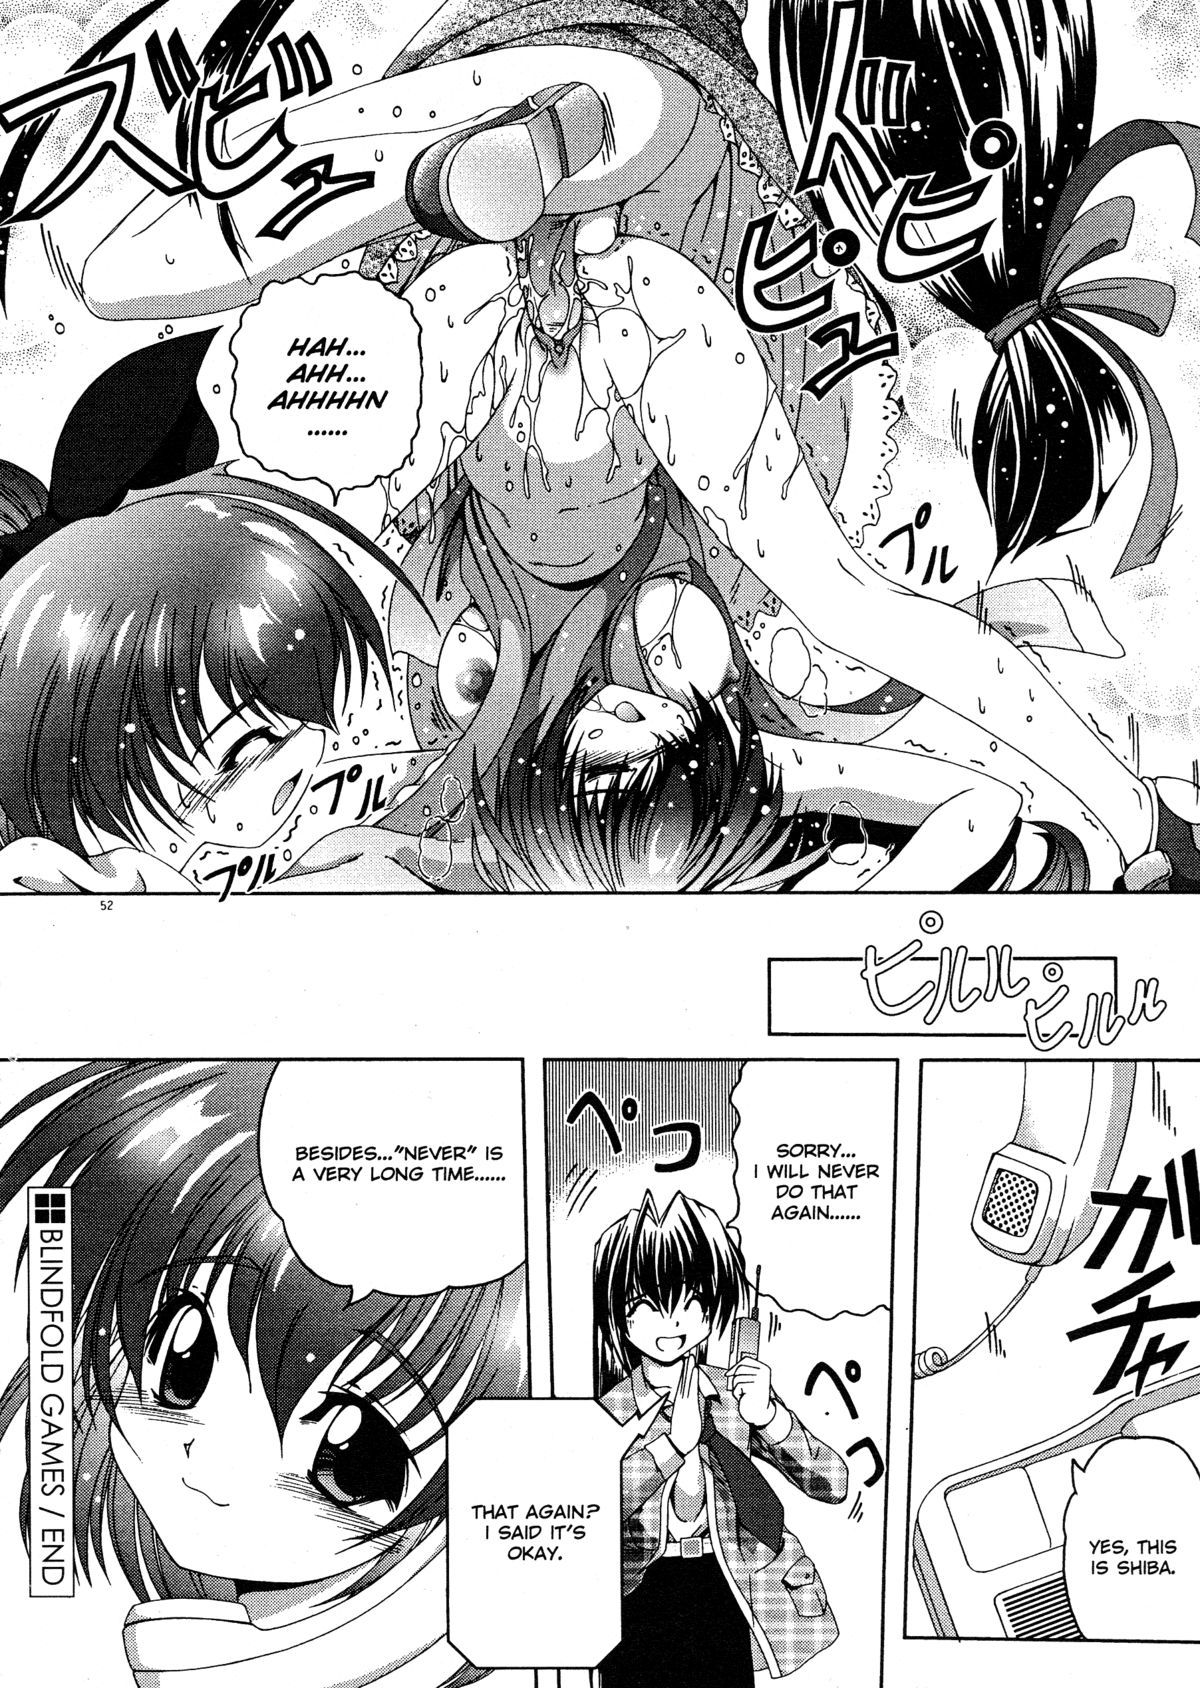 Flashbang!Hi-res 52 hentai manga